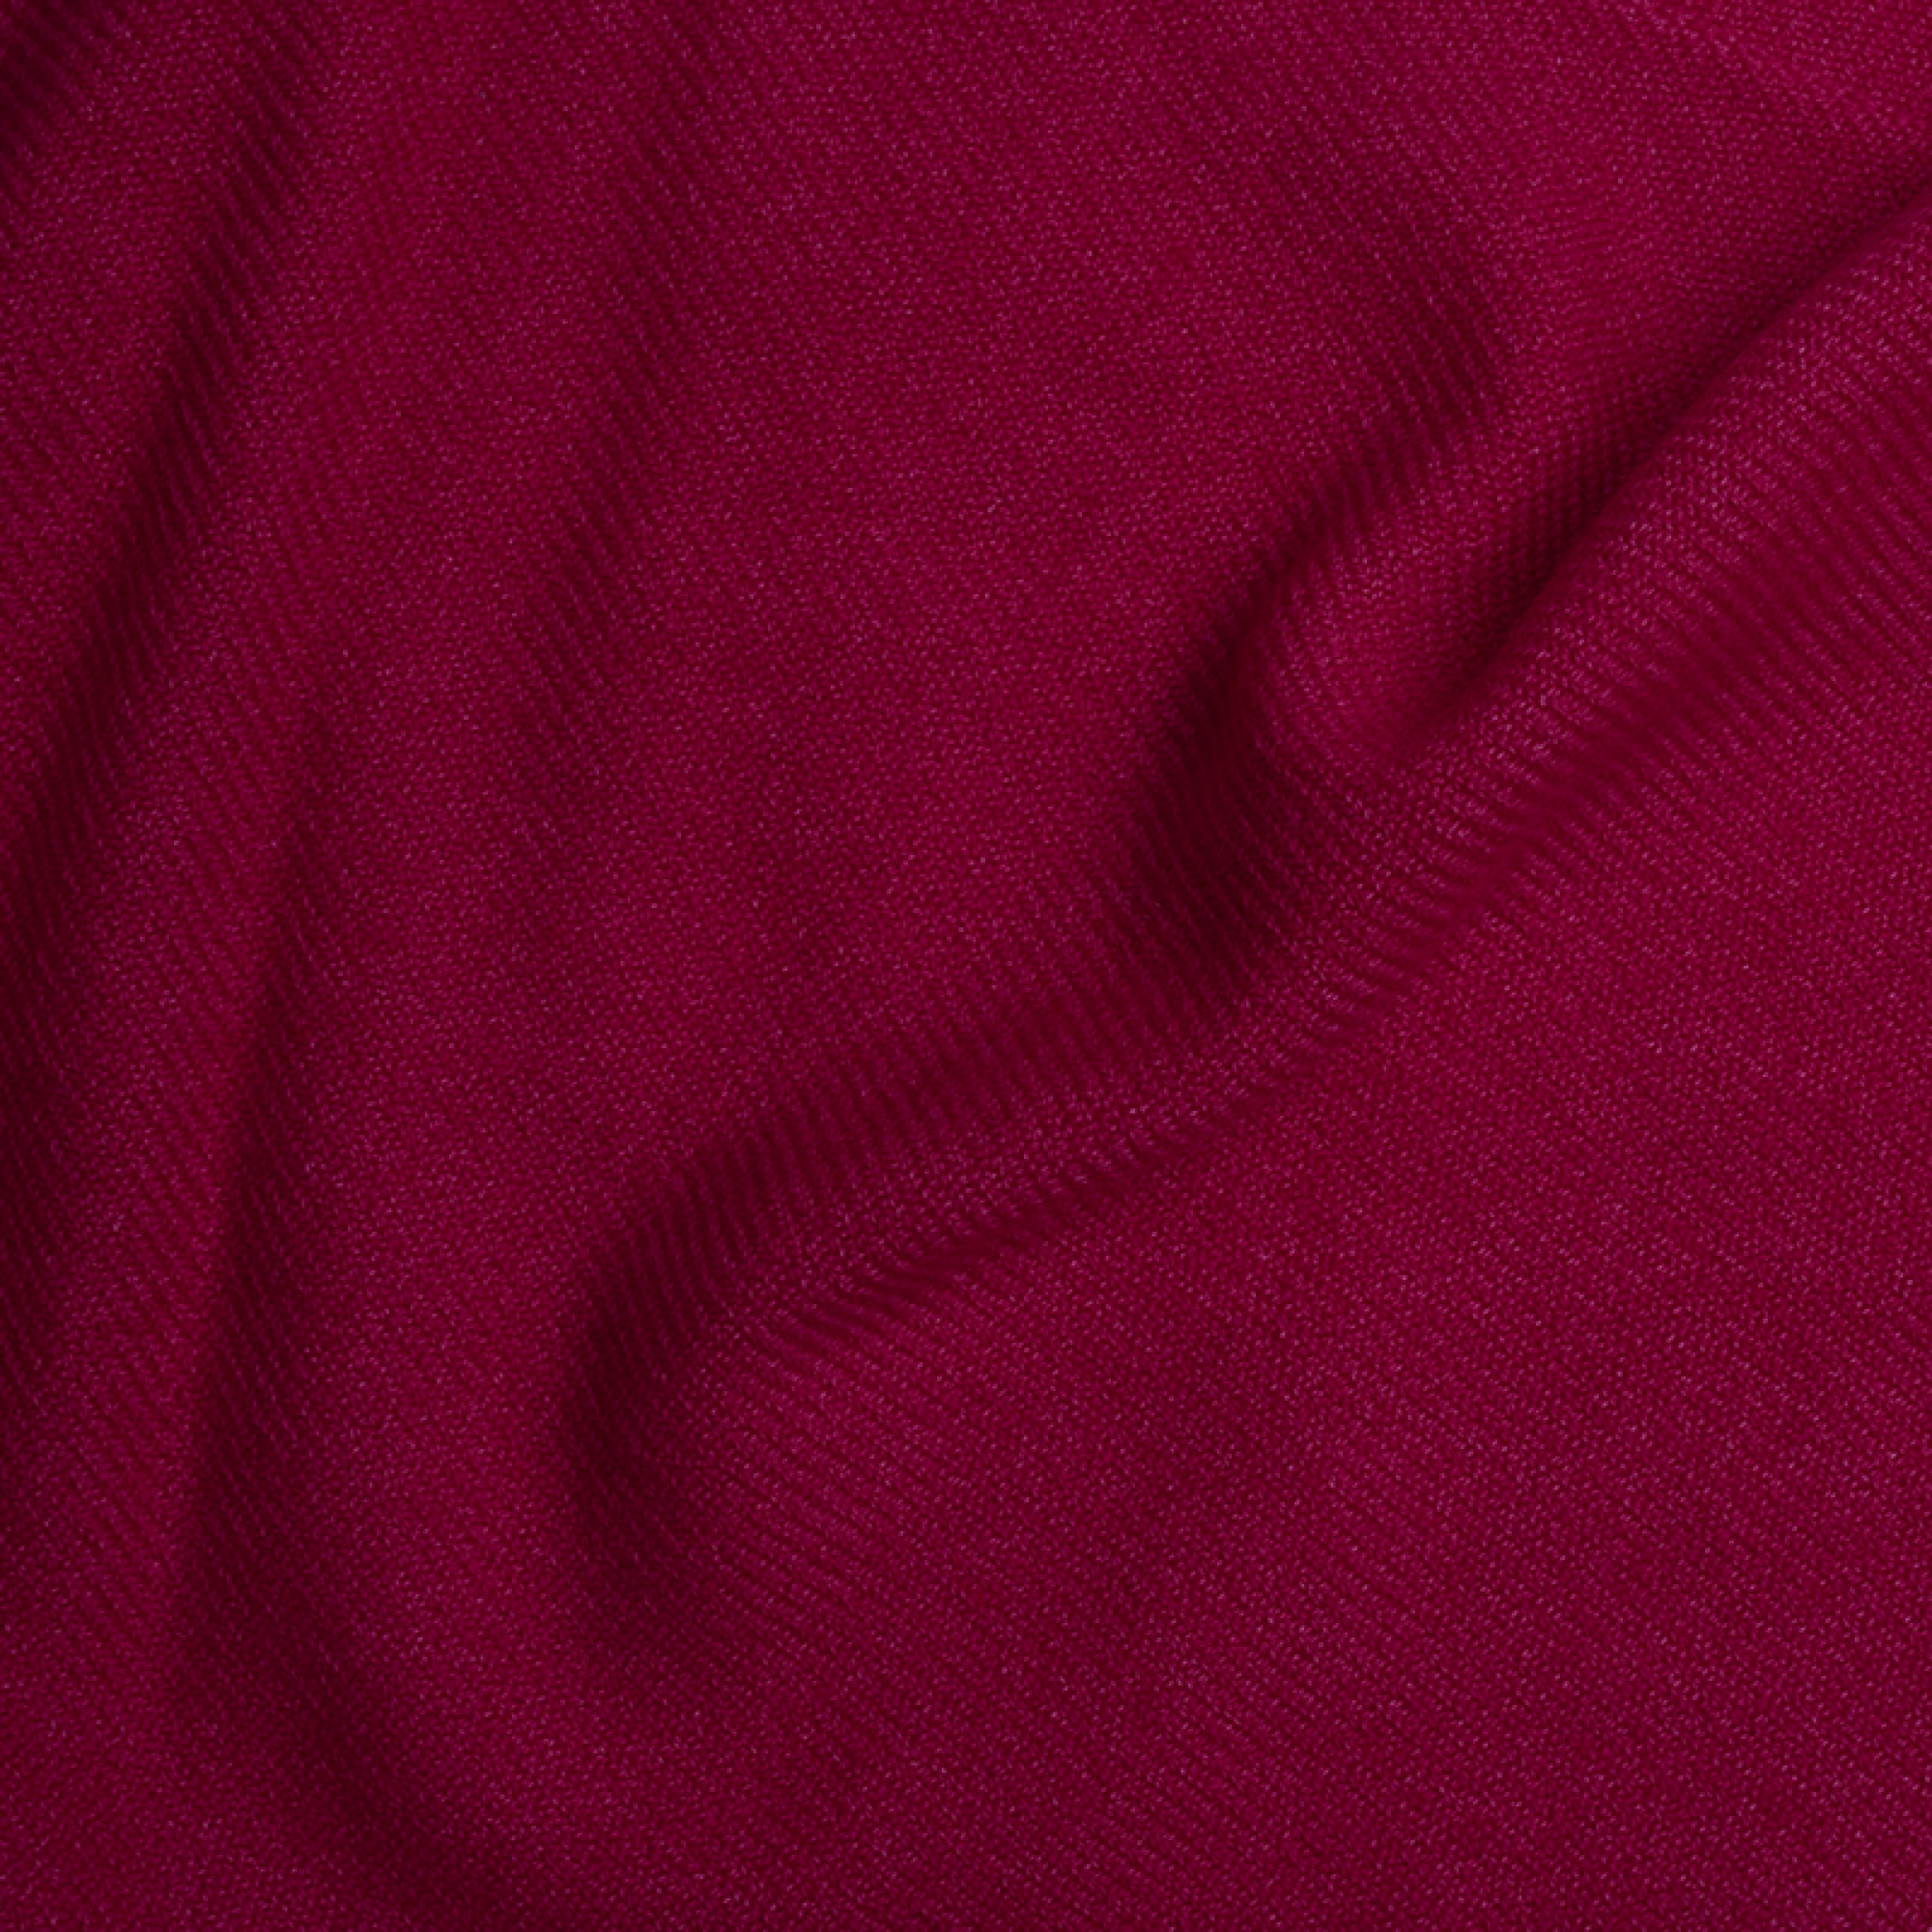 Cashmere accessories blanket toodoo plain s 140 x 200 bright rose 140 x 200 cm